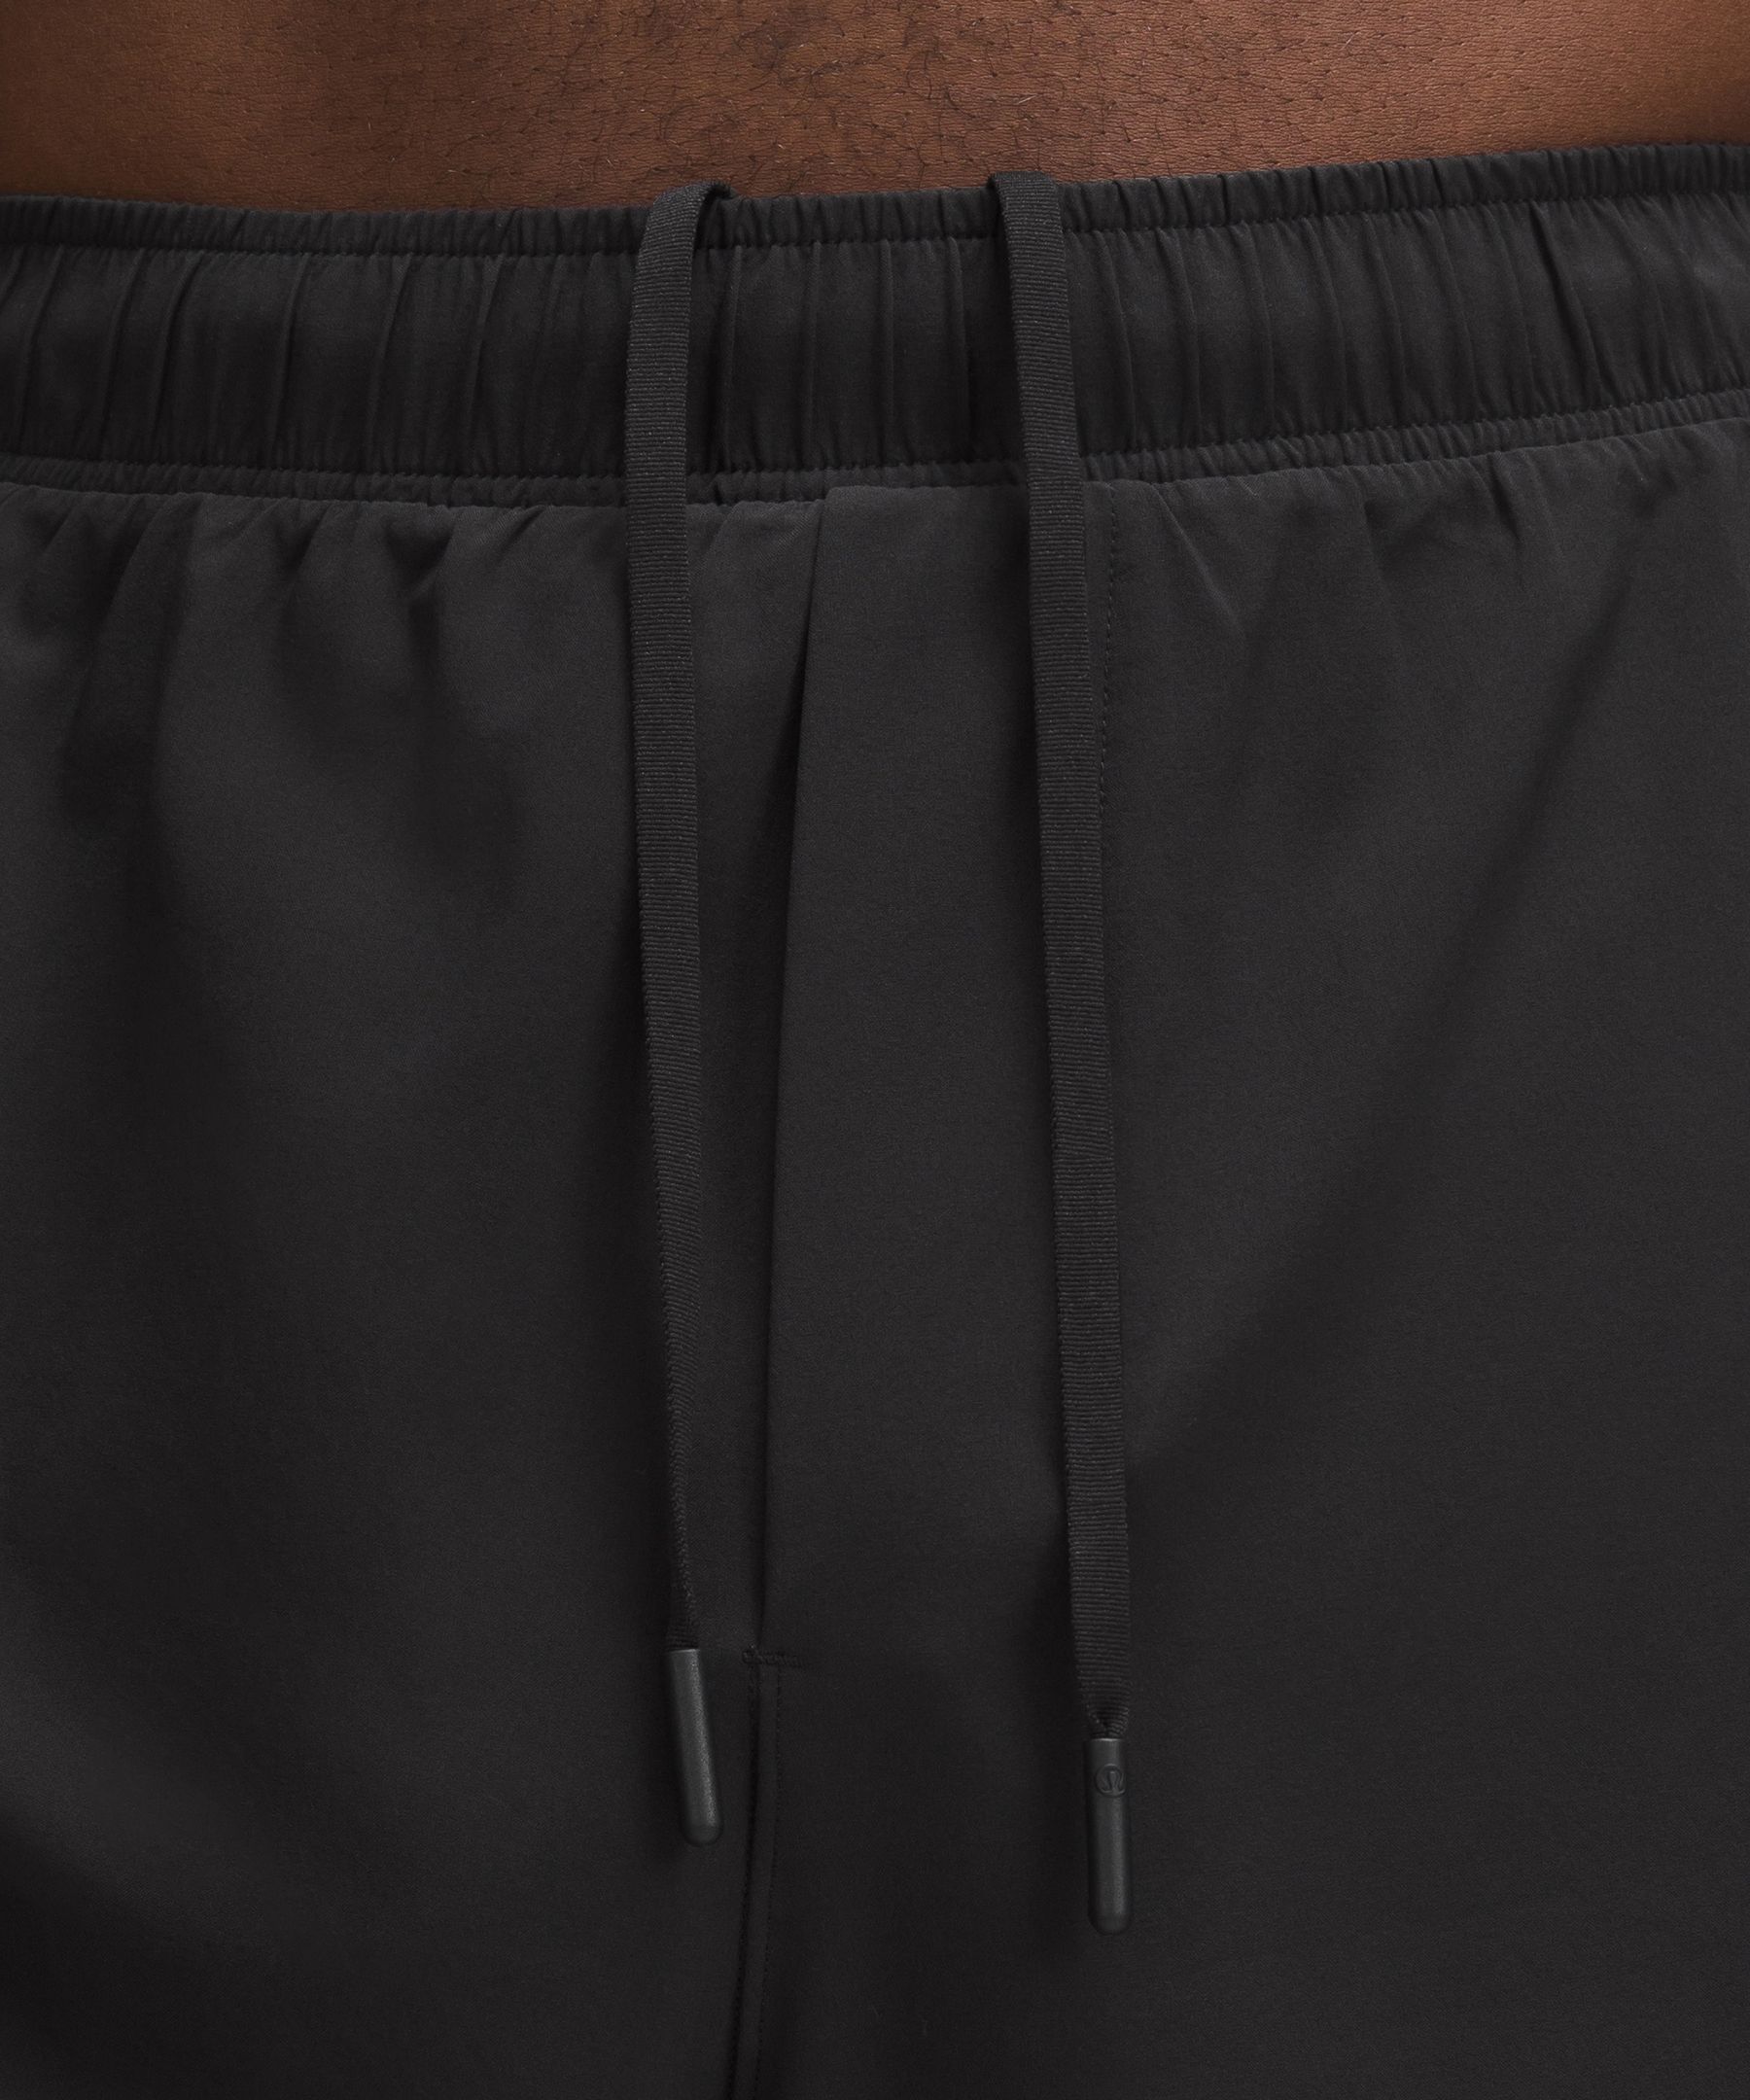 lululemon shorts liner